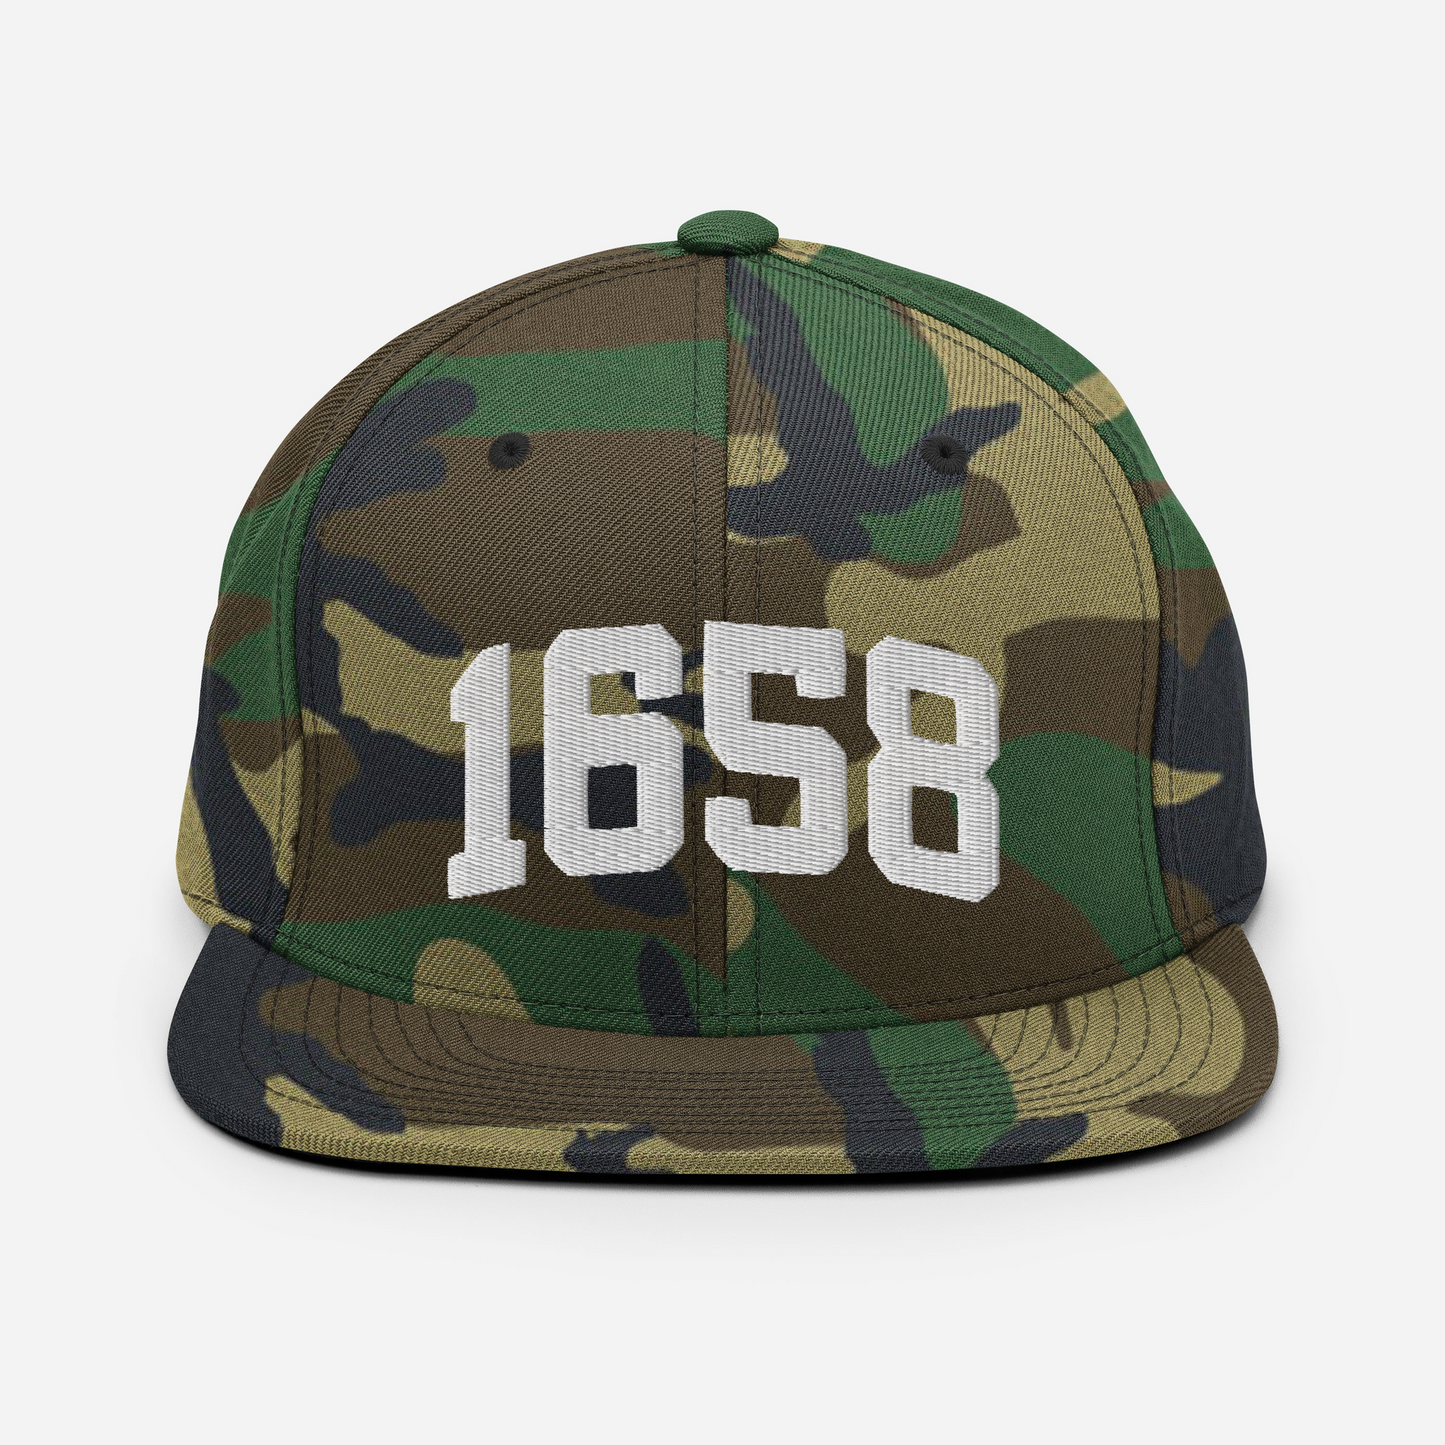 1658 Snapback Hat